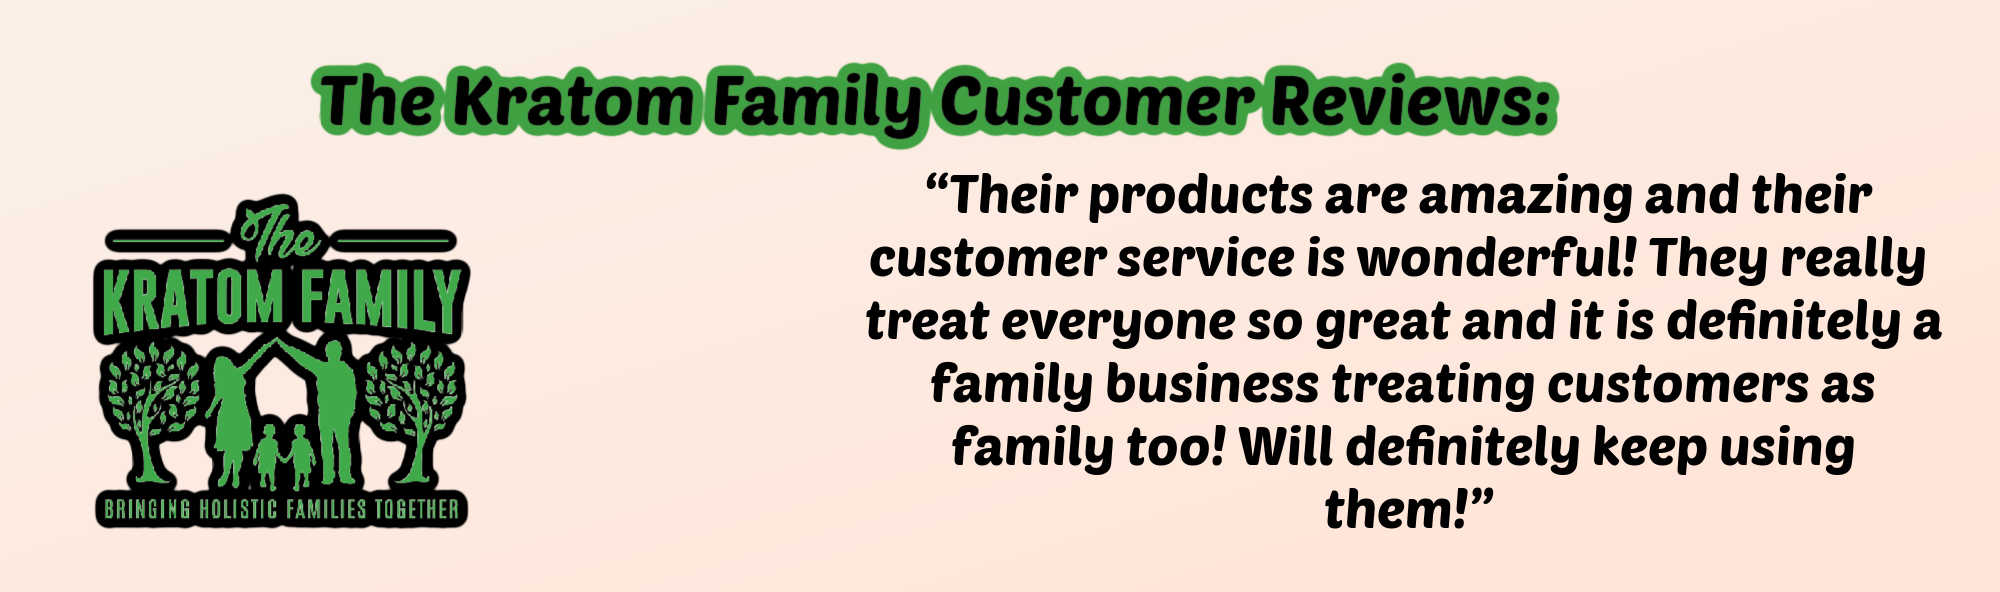 image of kratom family customer reviews